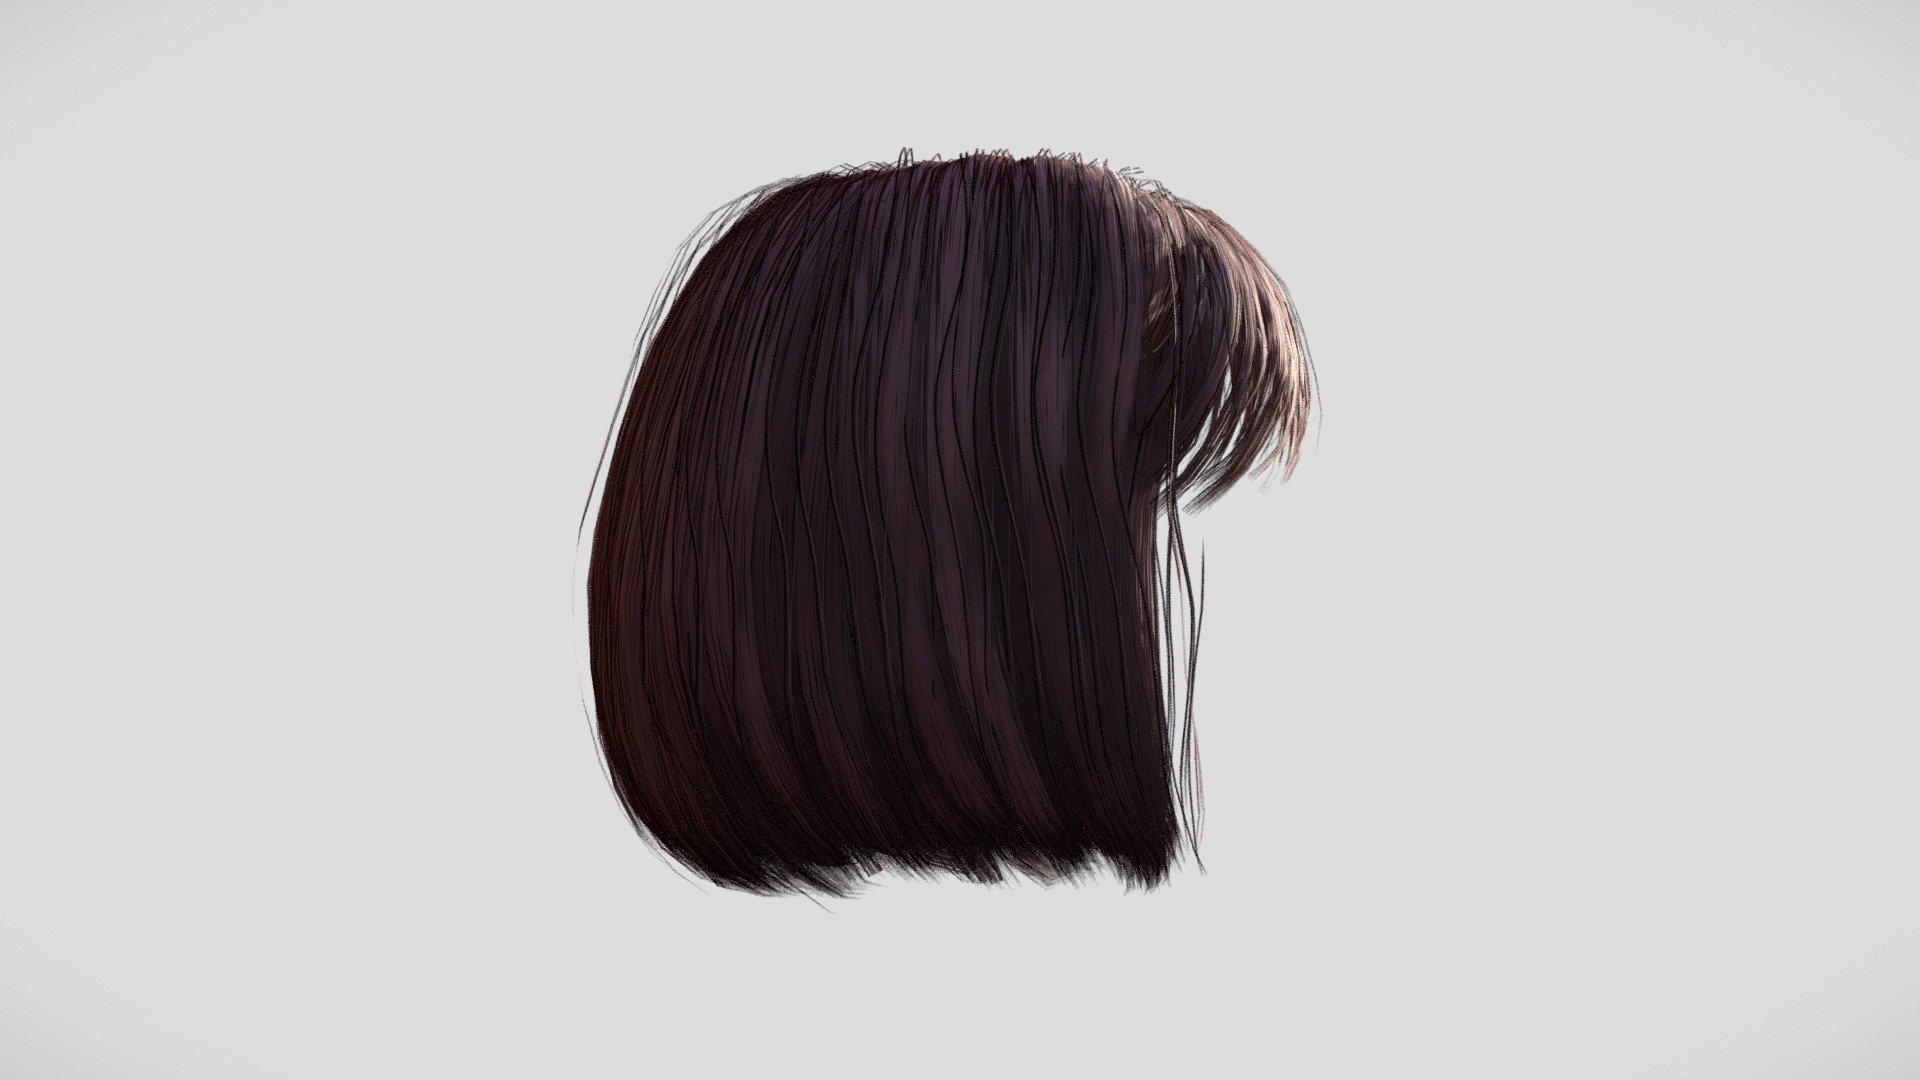 Female Hair 009 Buy Royalty Free 3d Model By Scanlab Photogrammetry